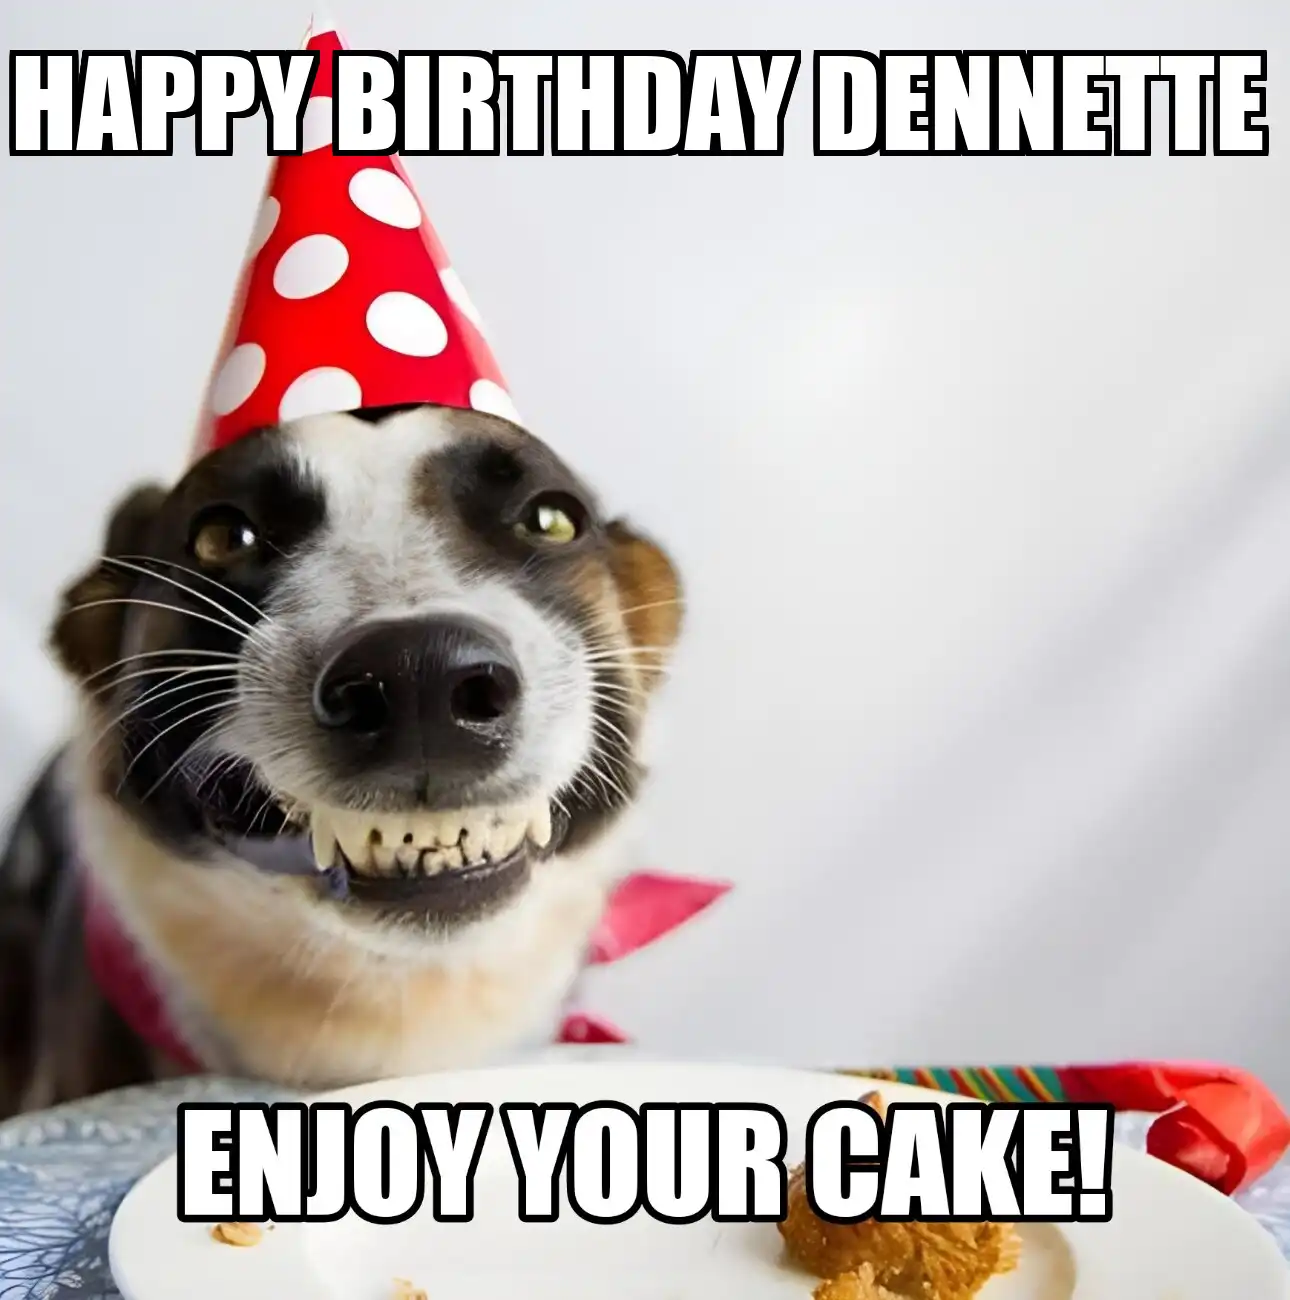 Happy Birthday Dennette Enjoy Your Cake Dog Meme